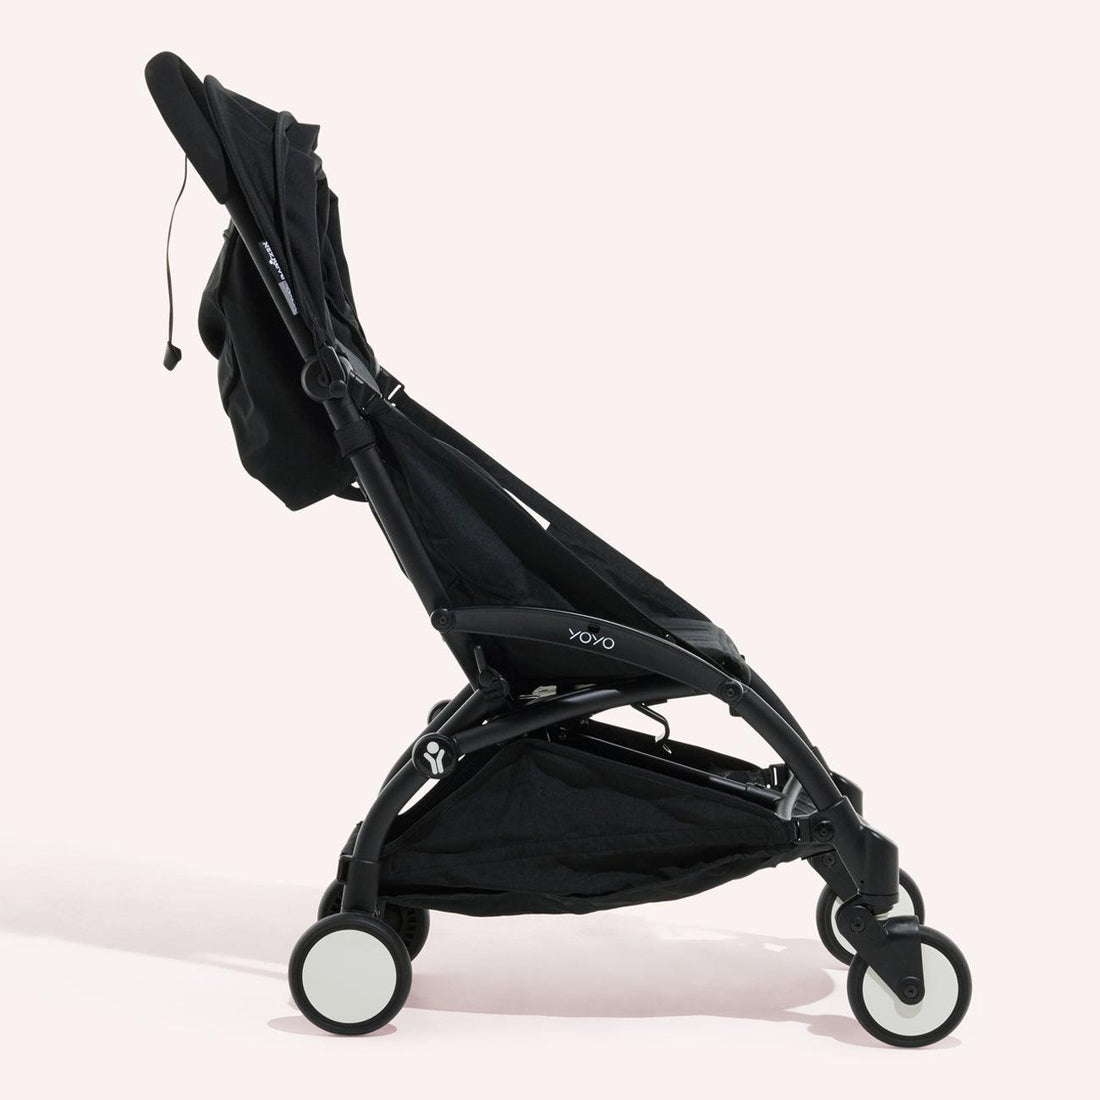 Babyzen I YOYO² Stroller & Accessories